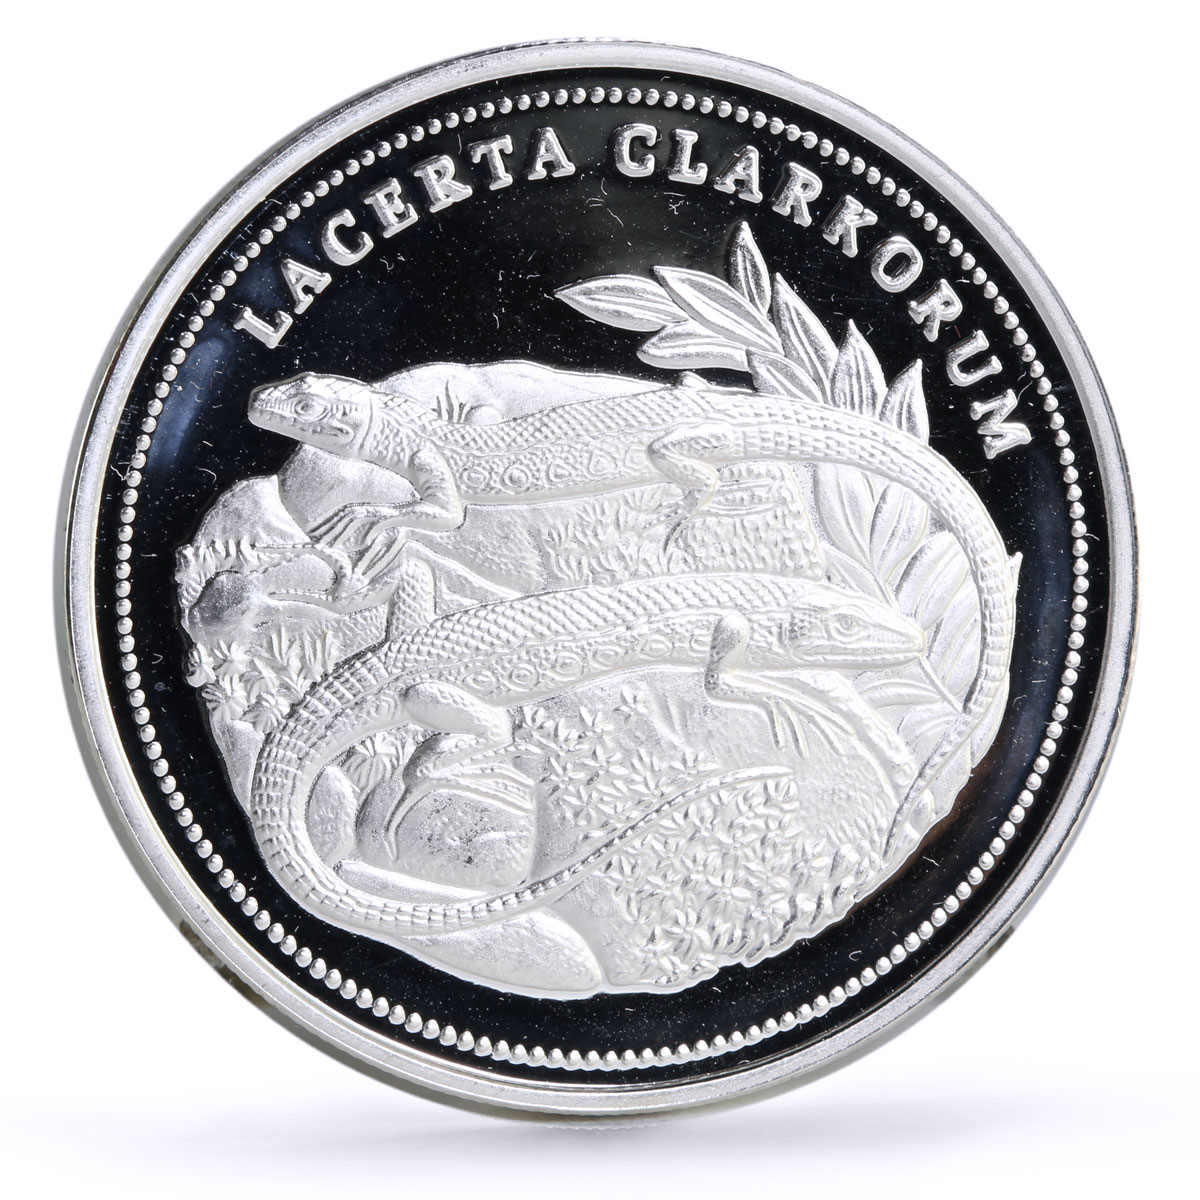 Turkey 4000000 lira Conservation Wildlife Lizard Fauna proof silver coin 1999